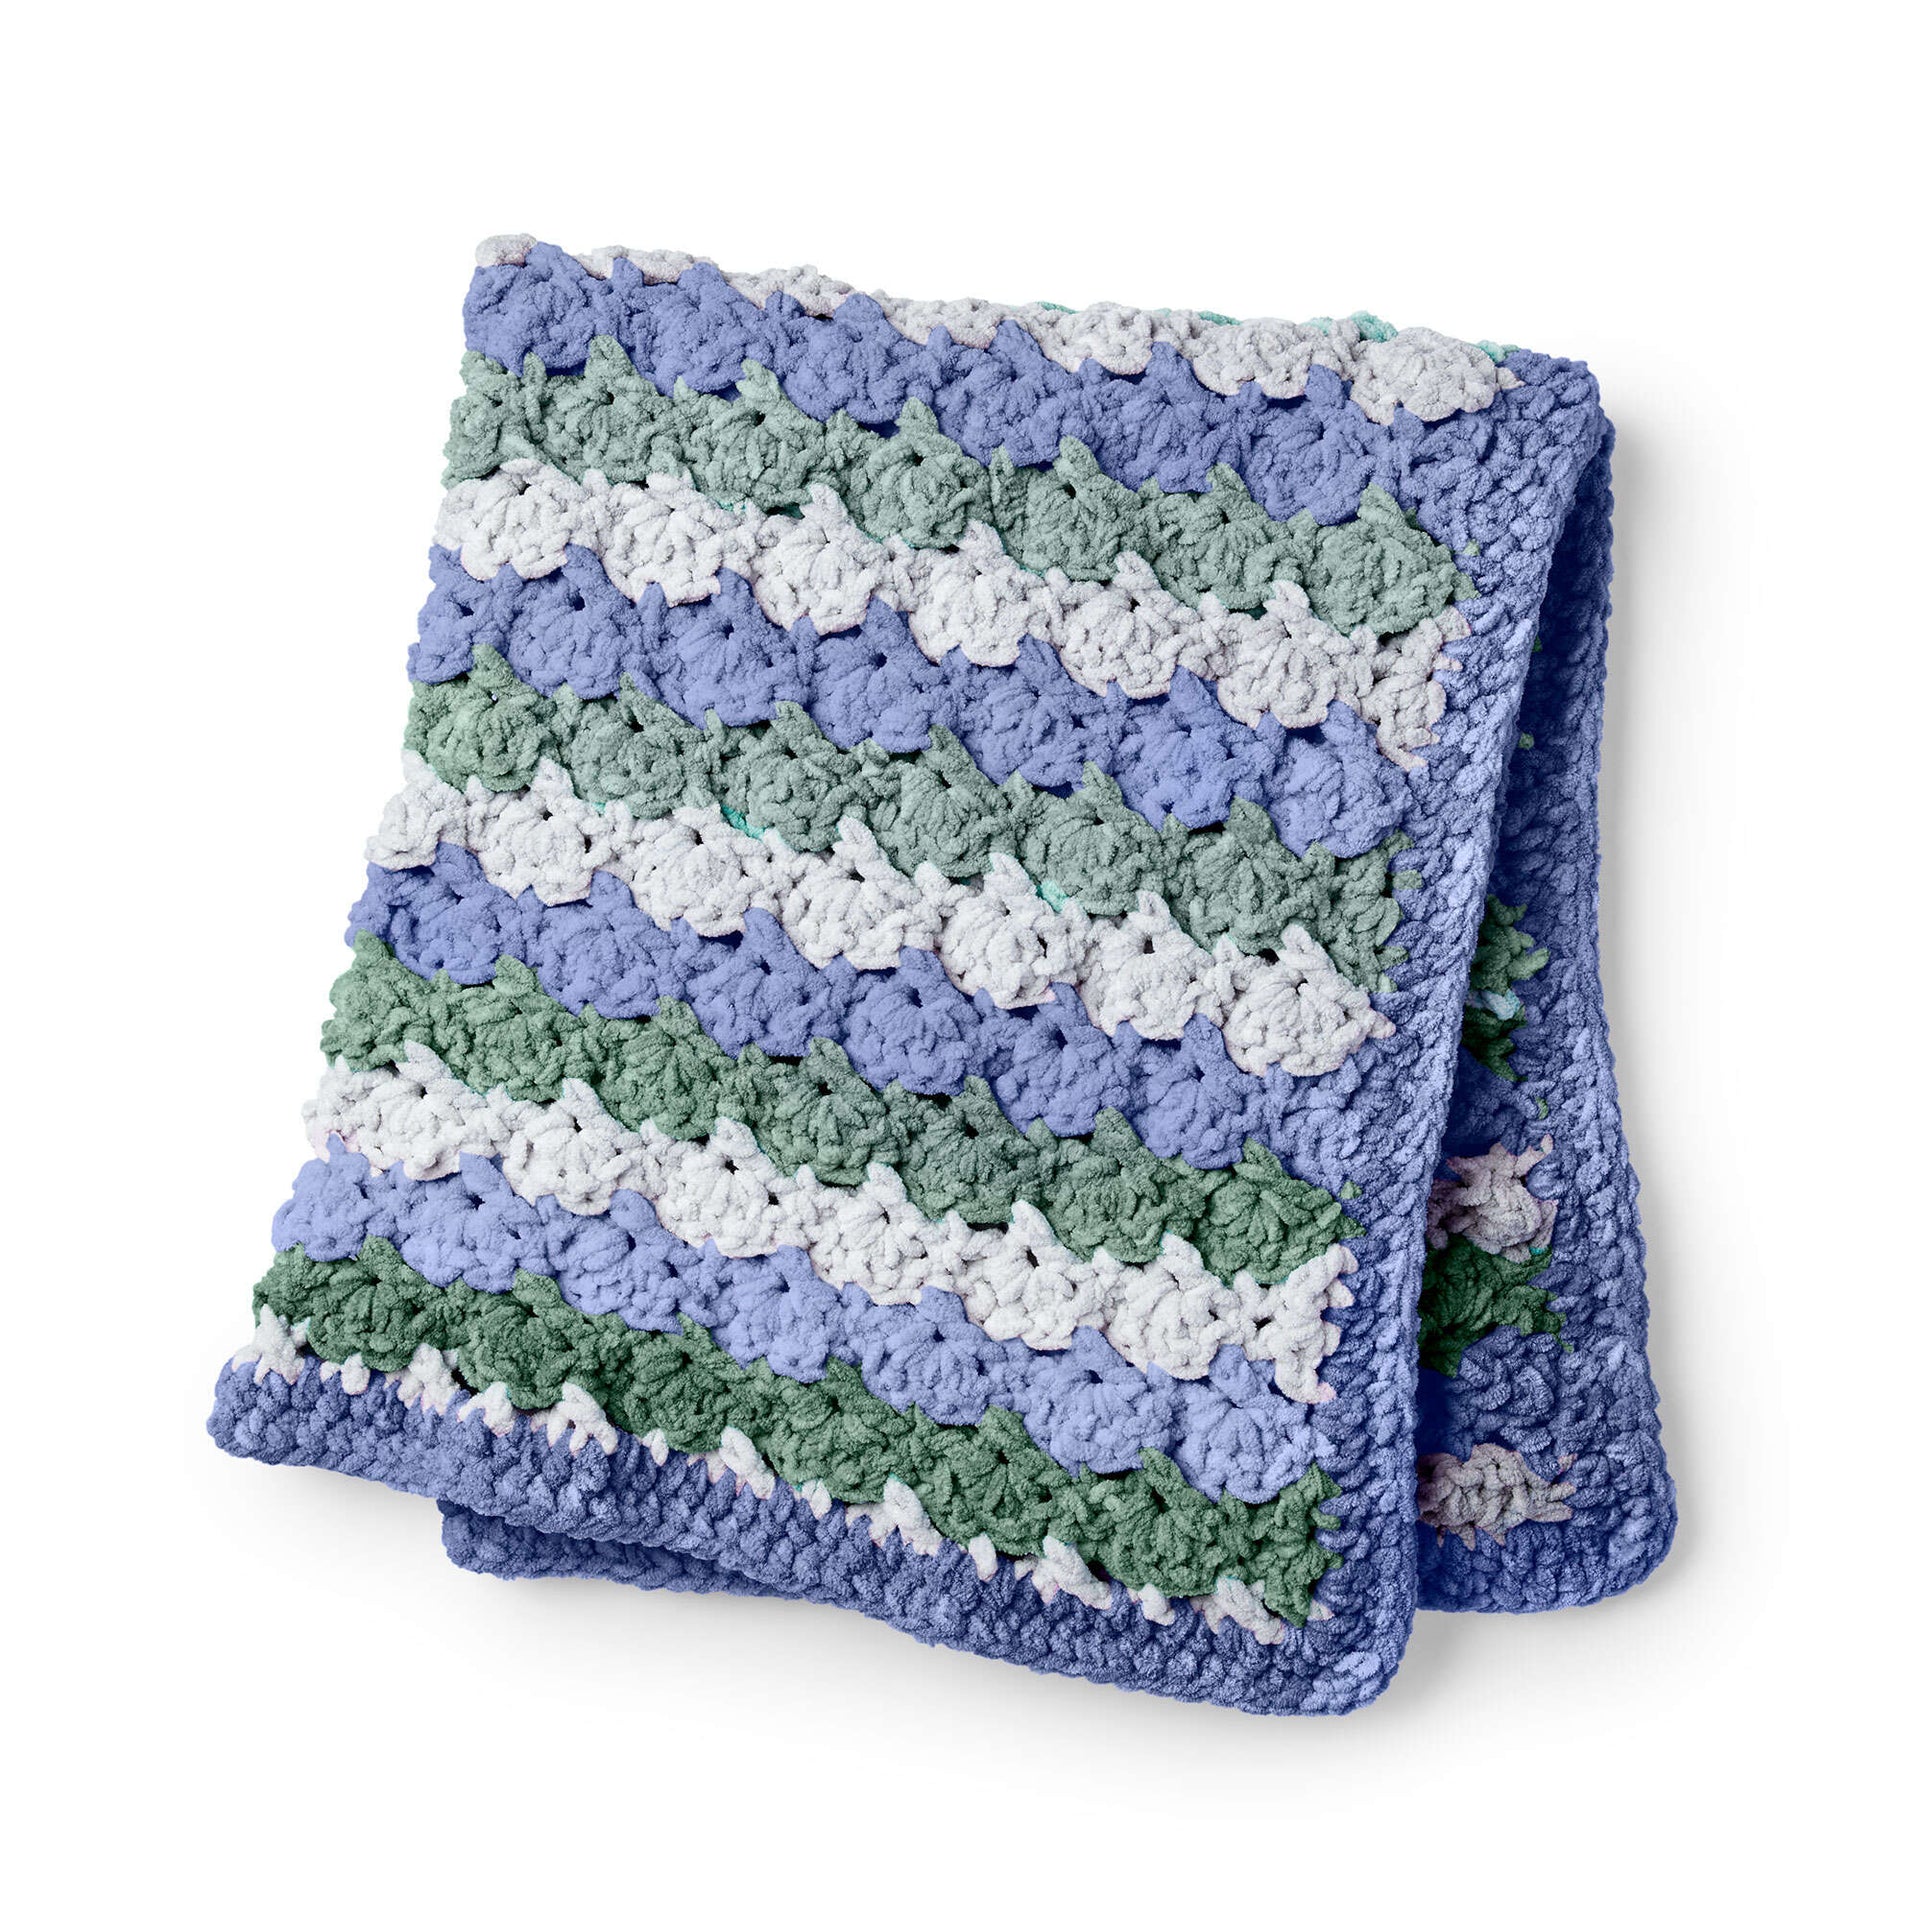 Bernat Baby Blanket Dappled Yarn - Wandering Blue